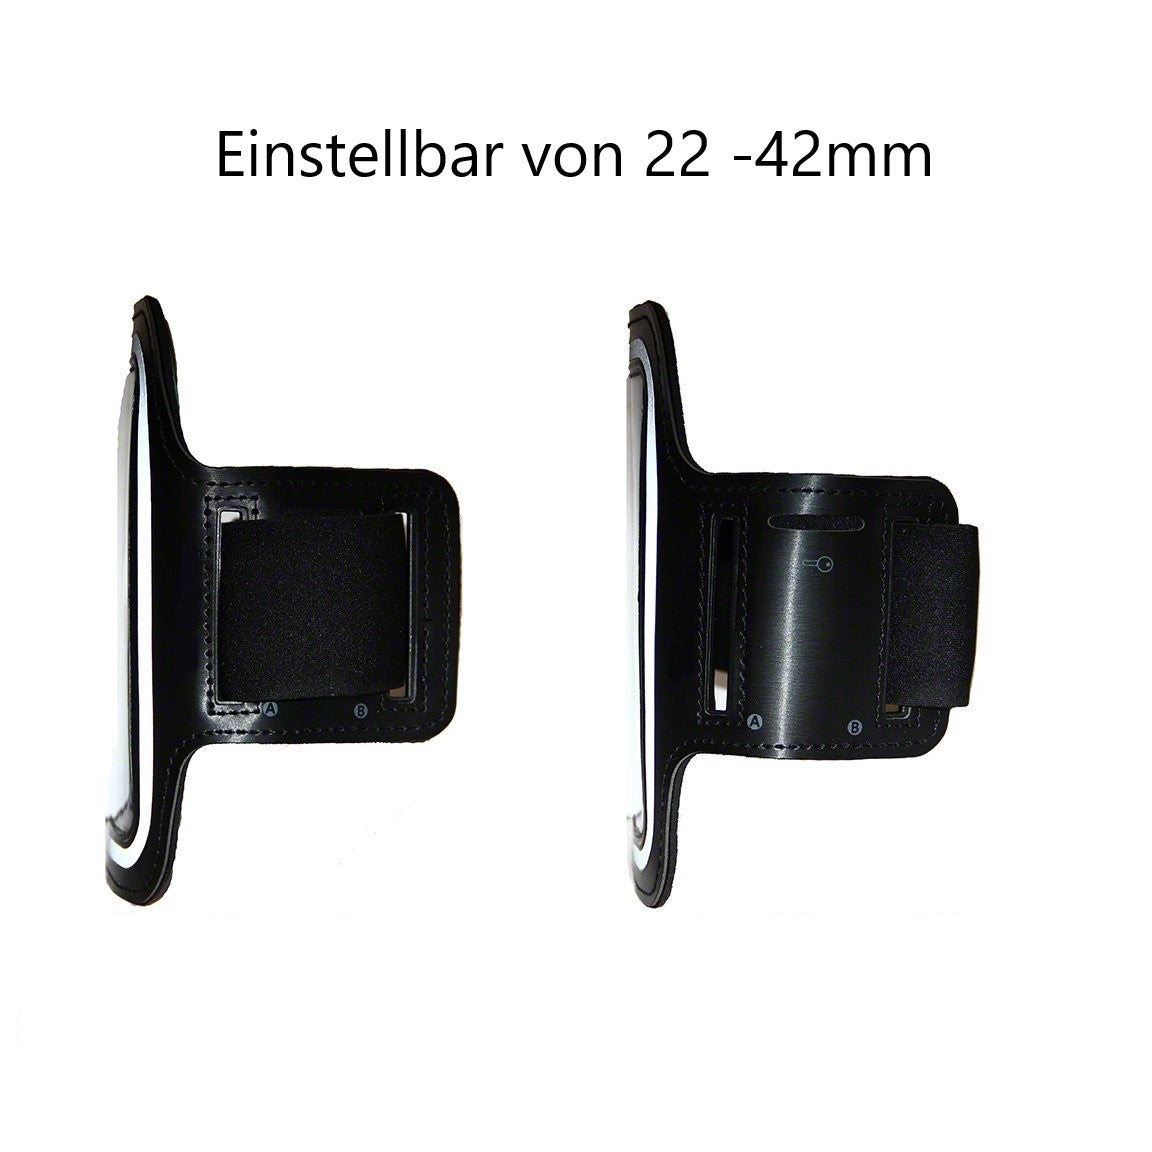 OnePlus 7 Pro Handy Sport Armband Hülle Sportarmband Tasche Laufhülle